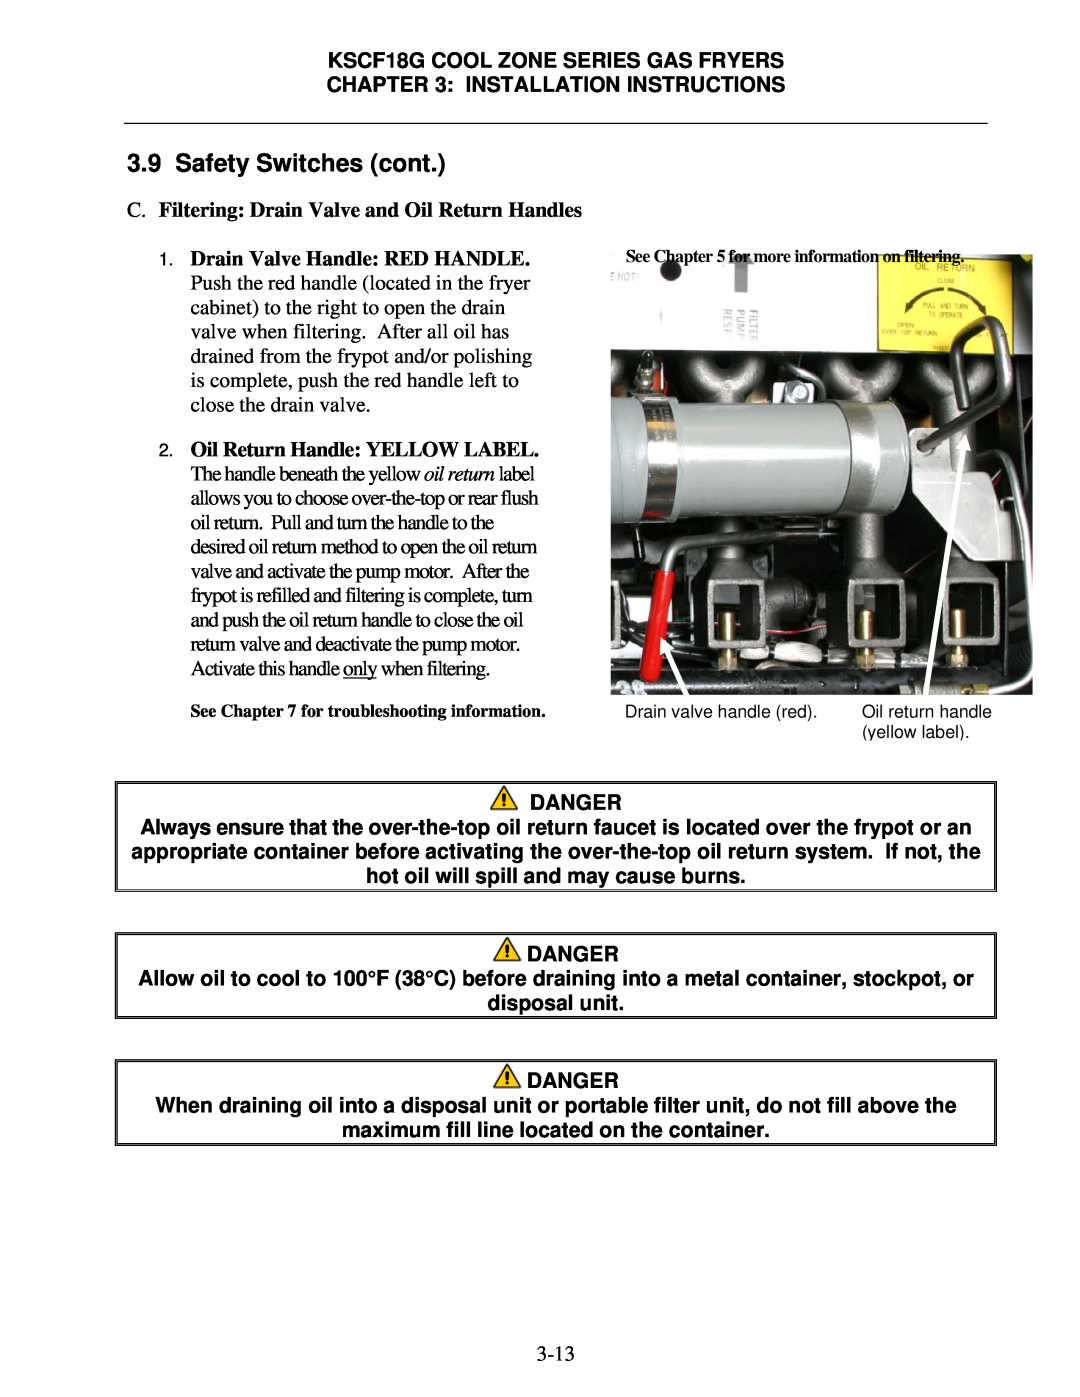 Frymaster KSCF18G C.Filtering: Drain Valve and Oil Return Handles, disposal unit DANGER, Safety Switches cont, Danger 